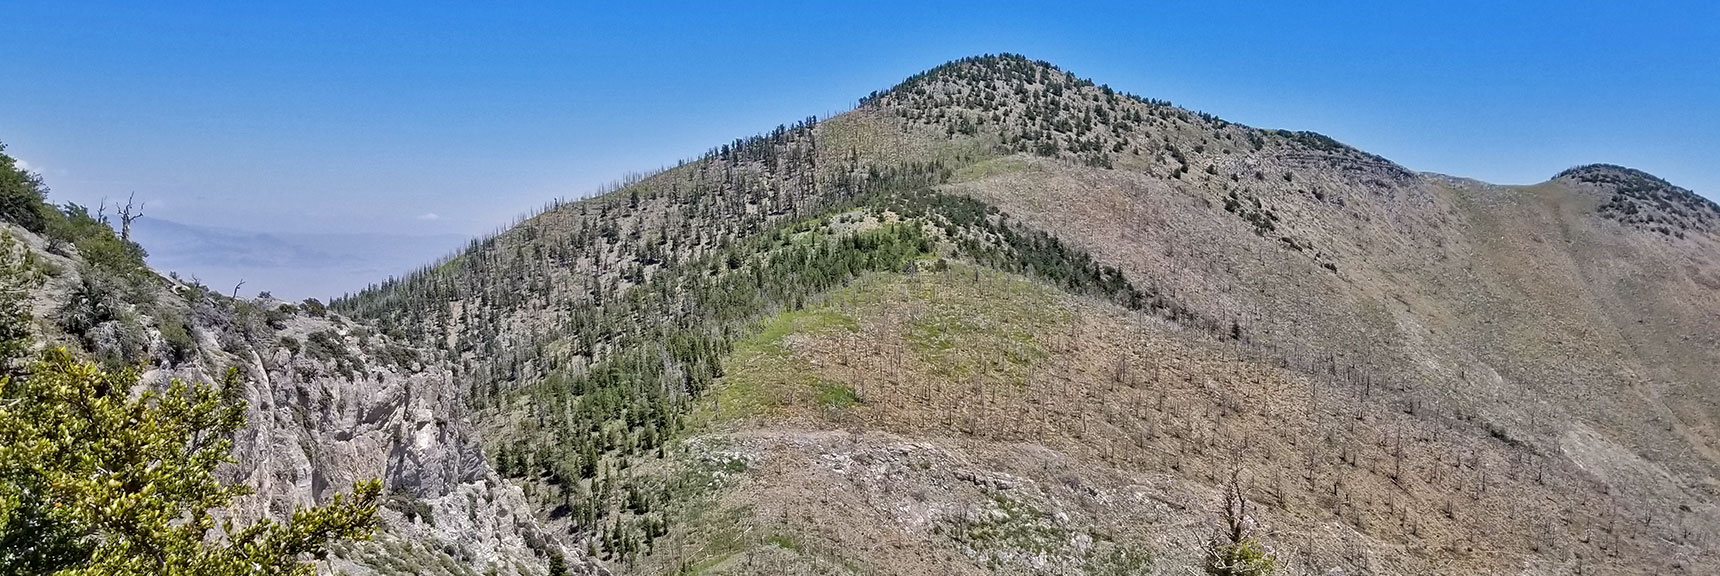 View from Griffith Peak North Ridge | Harris Mountain Griffith Peak Circuit in Mt. Charleston Wilderness, Nevada